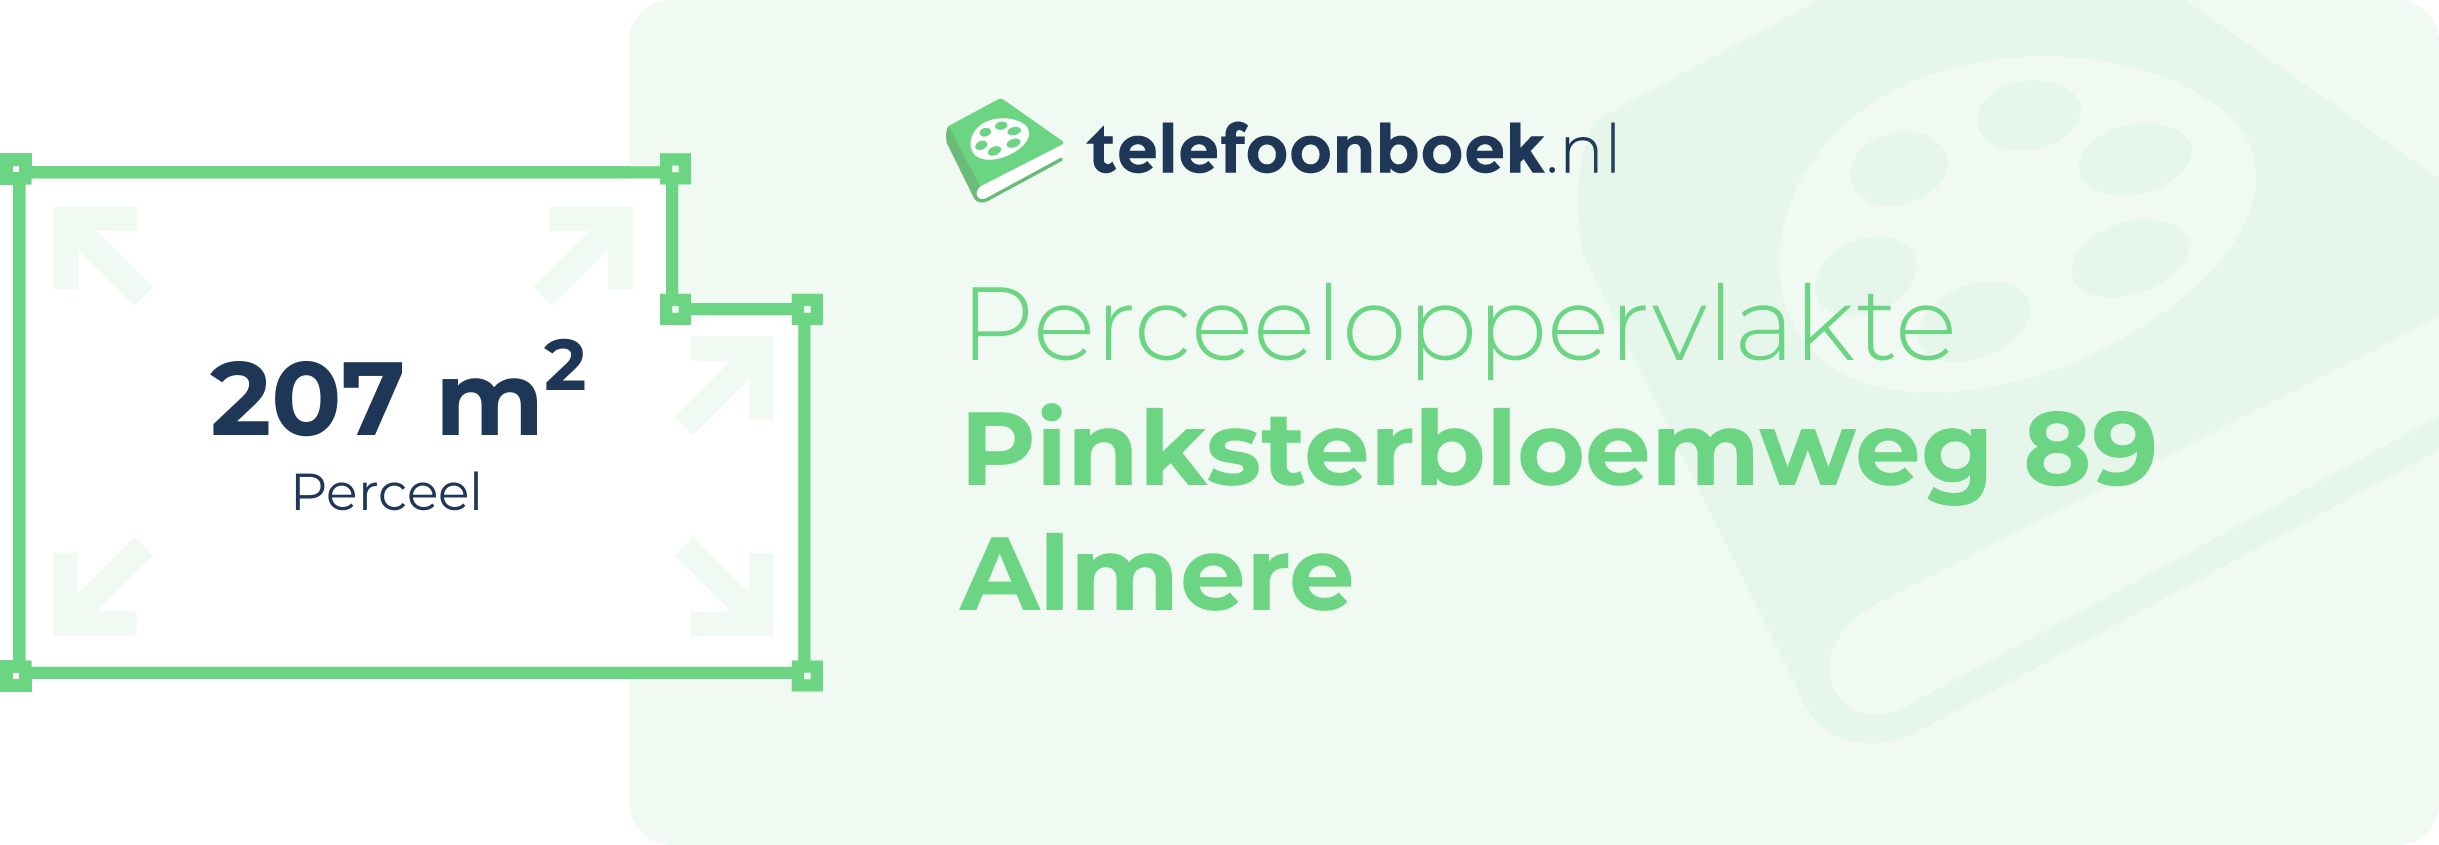 Perceeloppervlakte Pinksterbloemweg 89 Almere